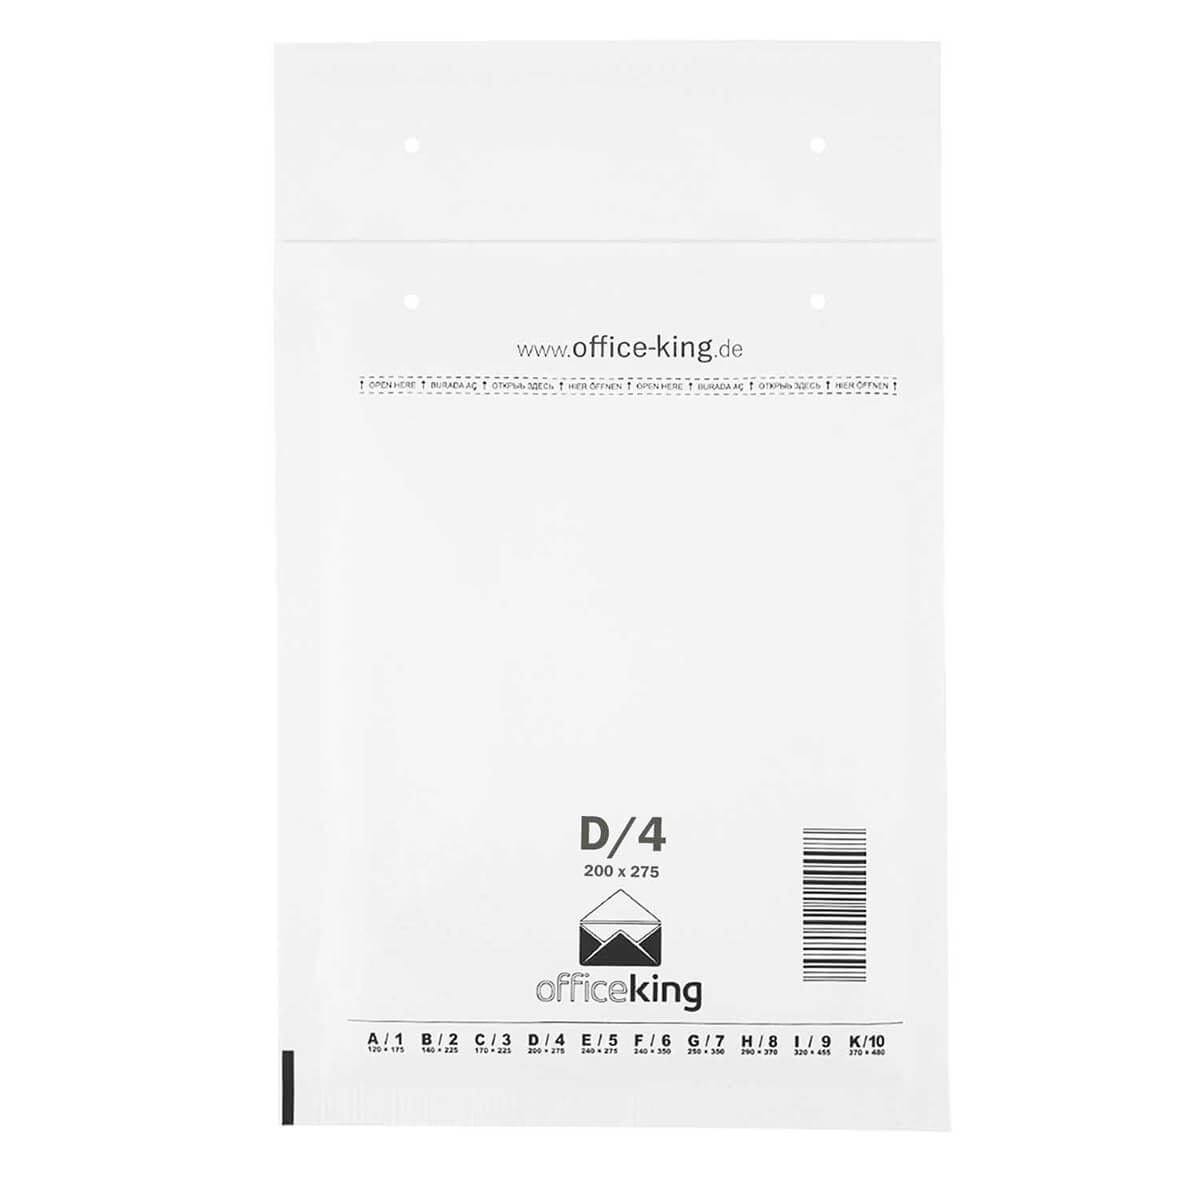 10x D4 Luftpolstertaschen 200x275 mm weiß - officeking